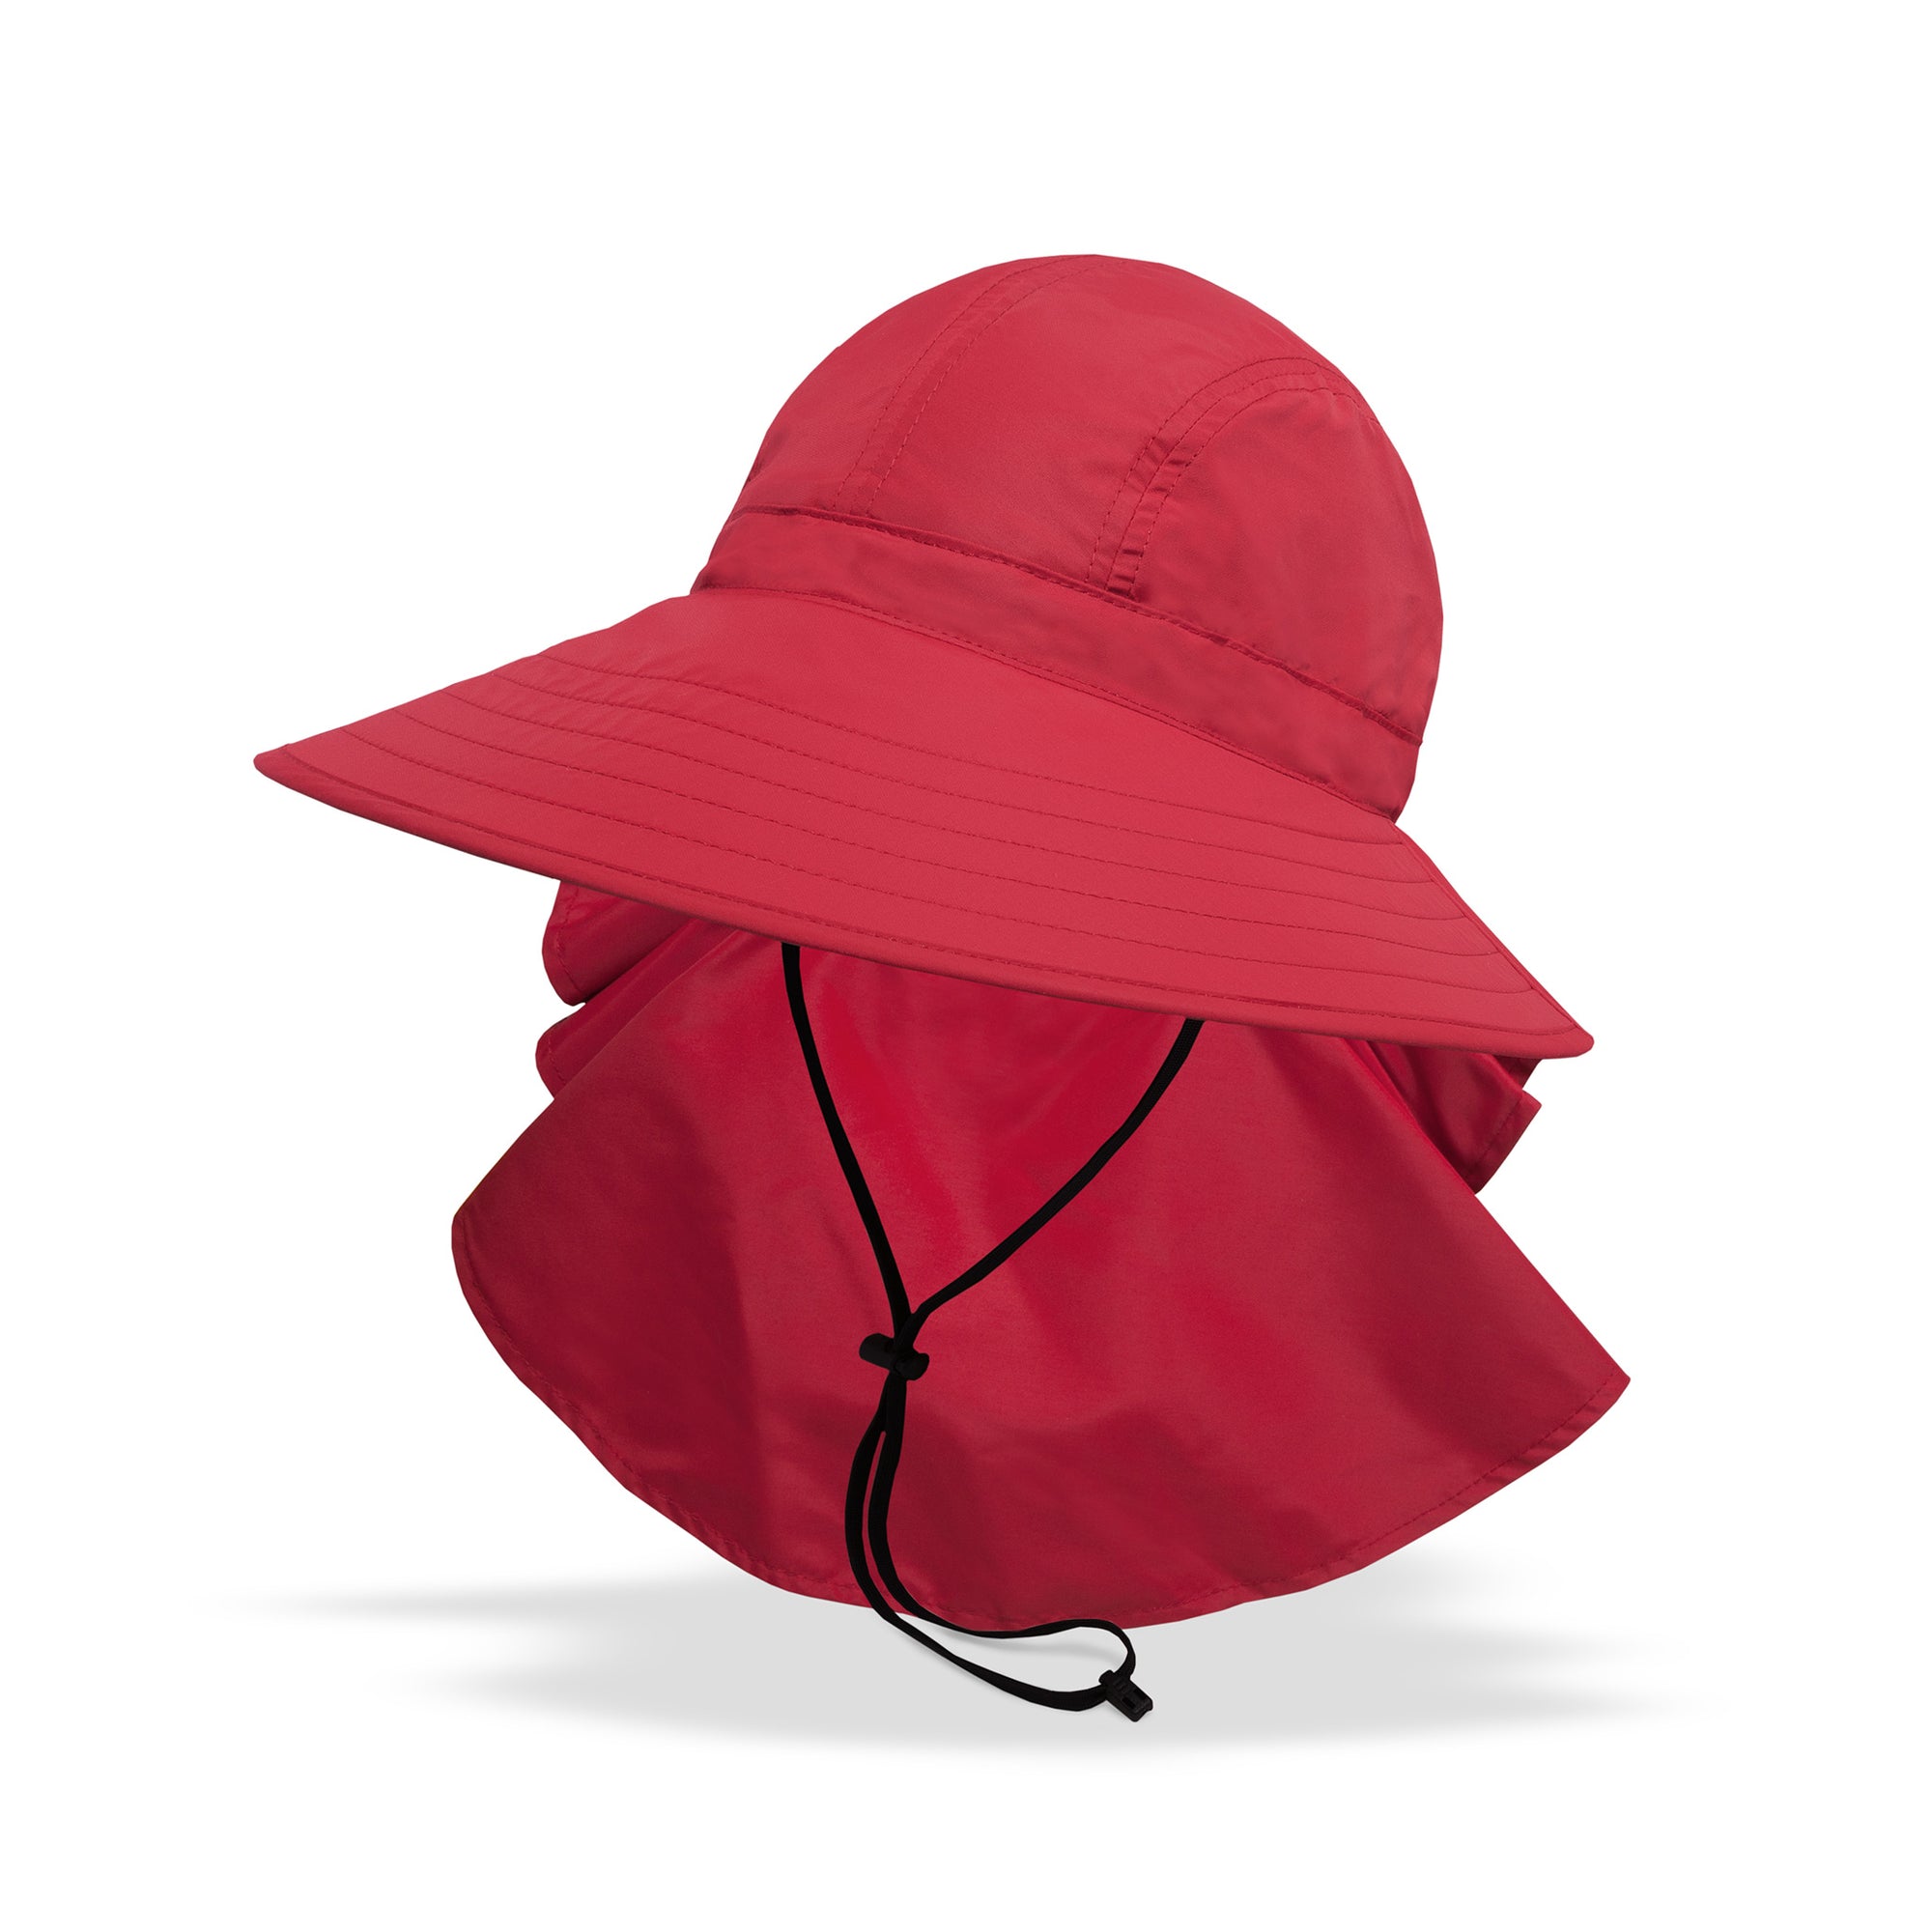 the women's sundancer hat in red